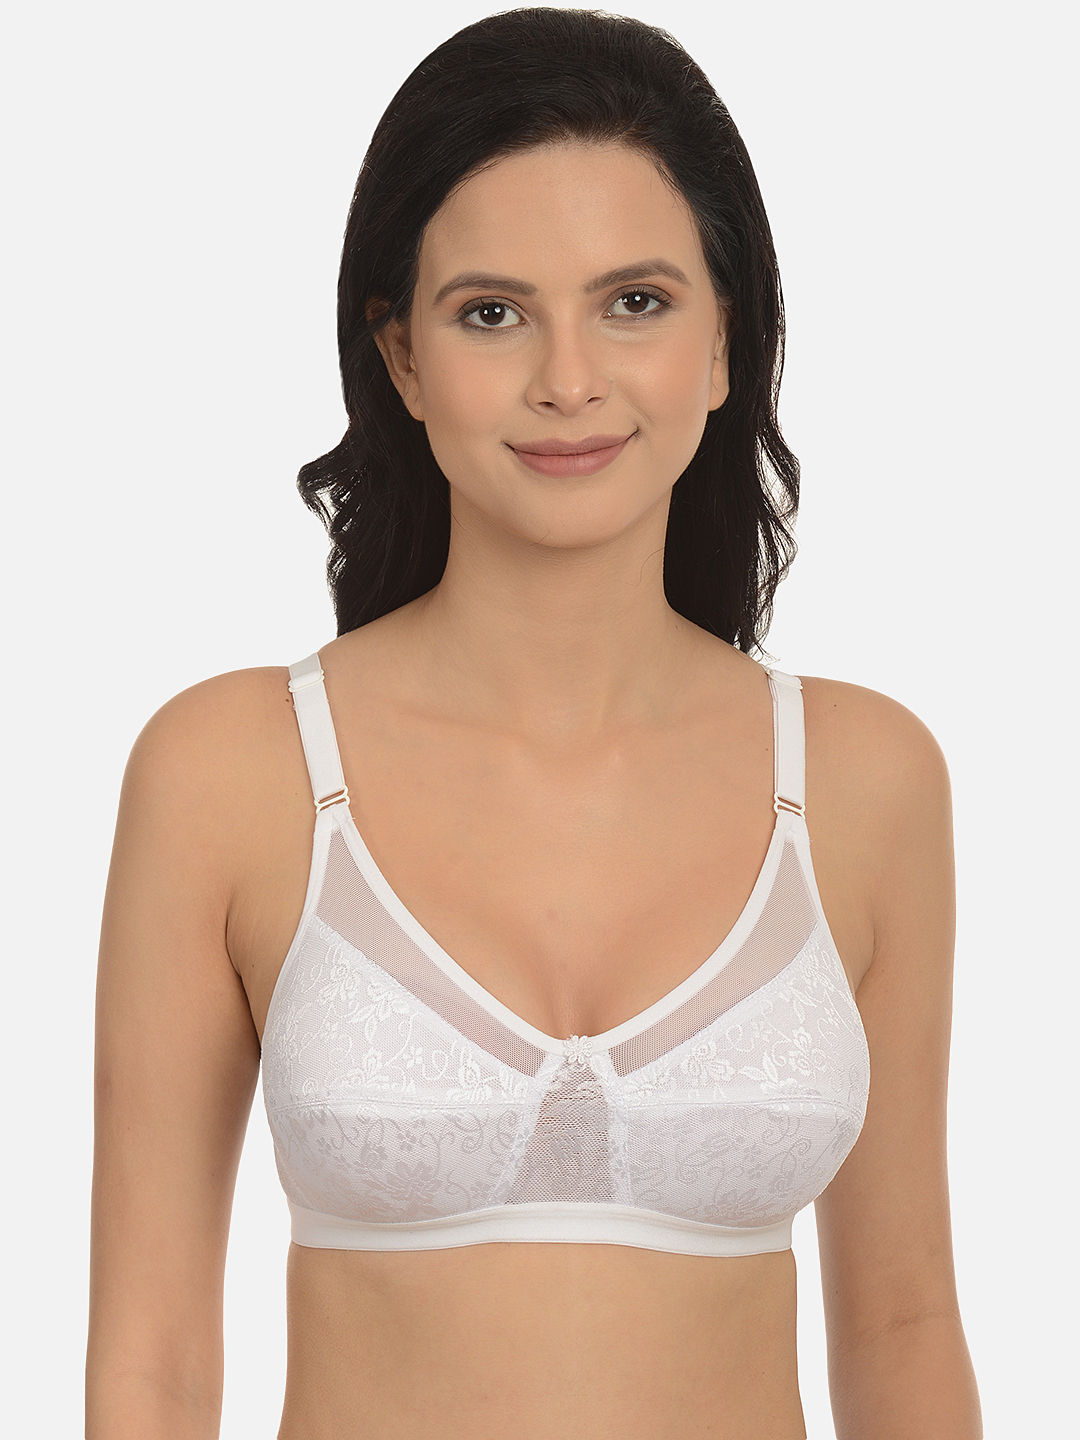 Women's Bra Wirefree Cotton Bra, Women Sleeping Underwear Wireless Soft Cup  Plus Size Minimizer Bra Full Coverage Bralette (Color : Beige, Size : 40F)